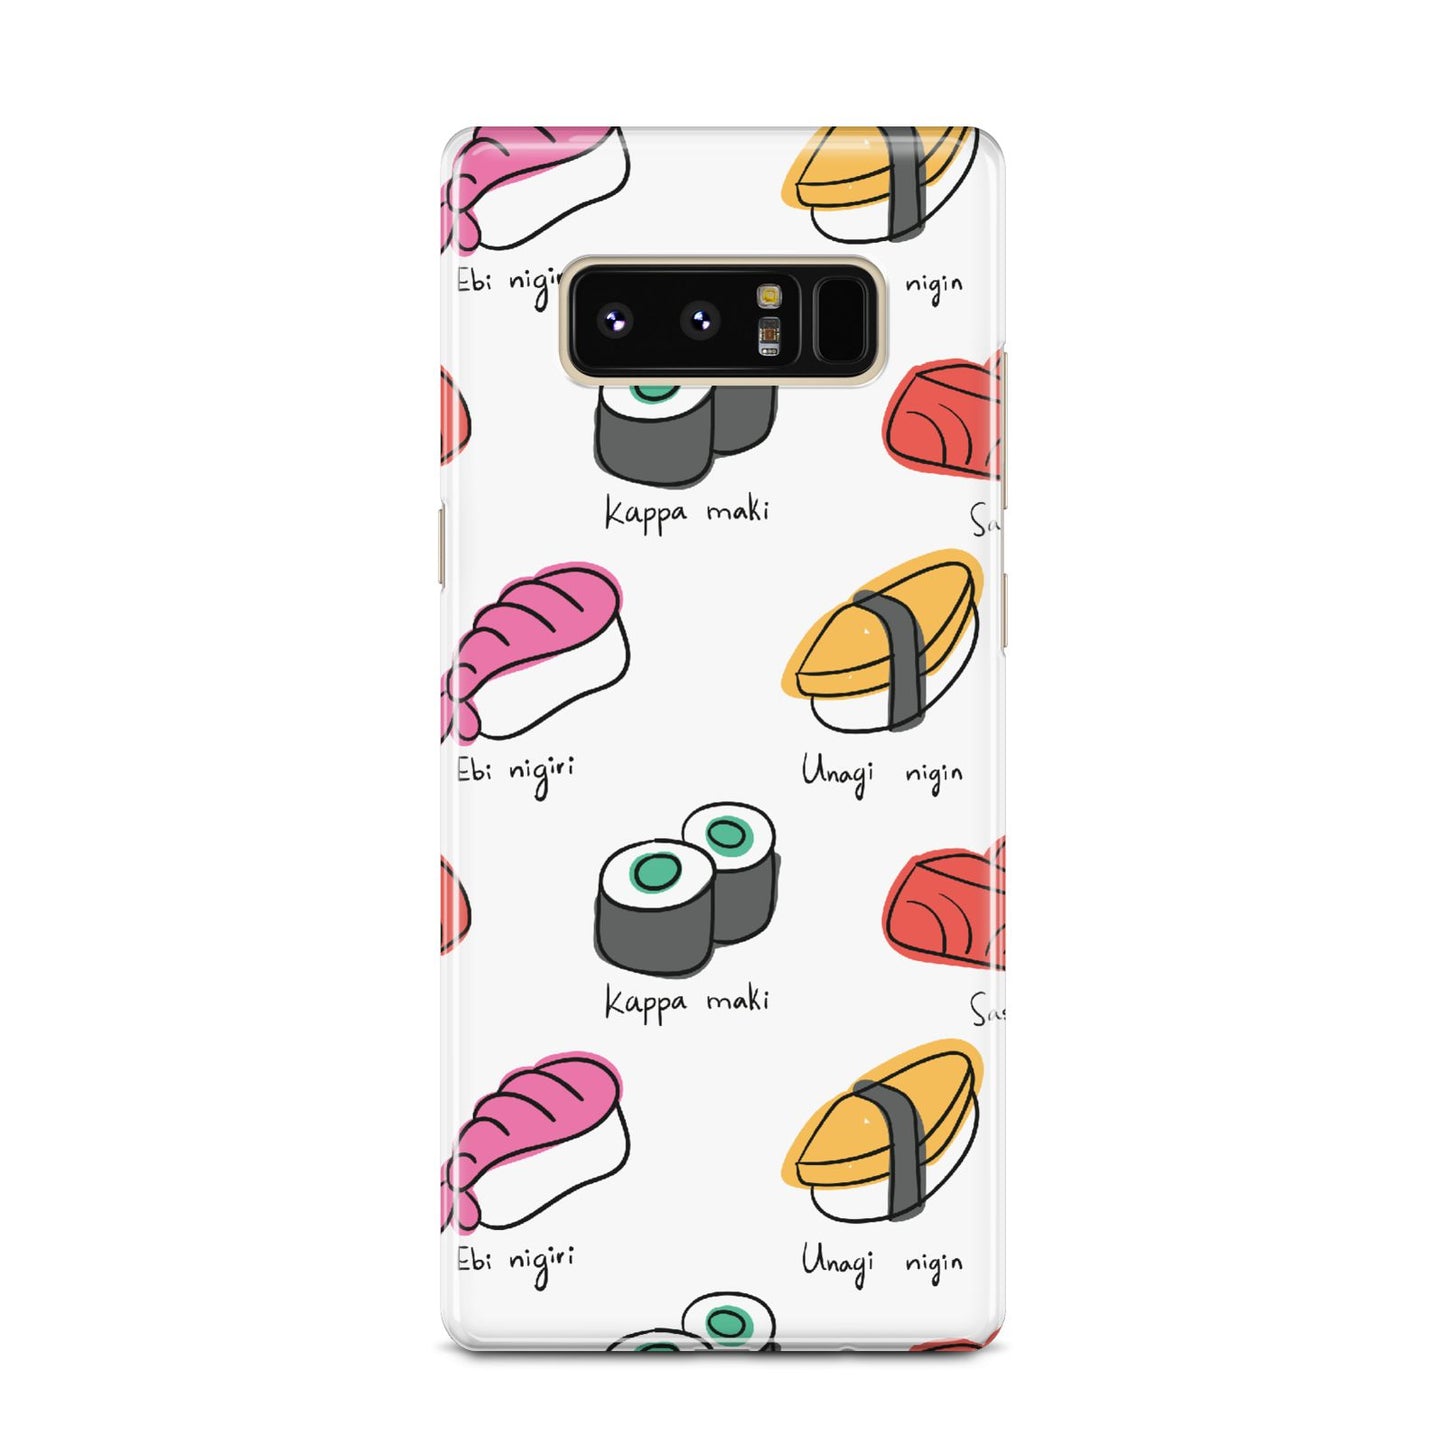 Sashimi Kappa Maki Sushi Samsung Galaxy Note 8 Case